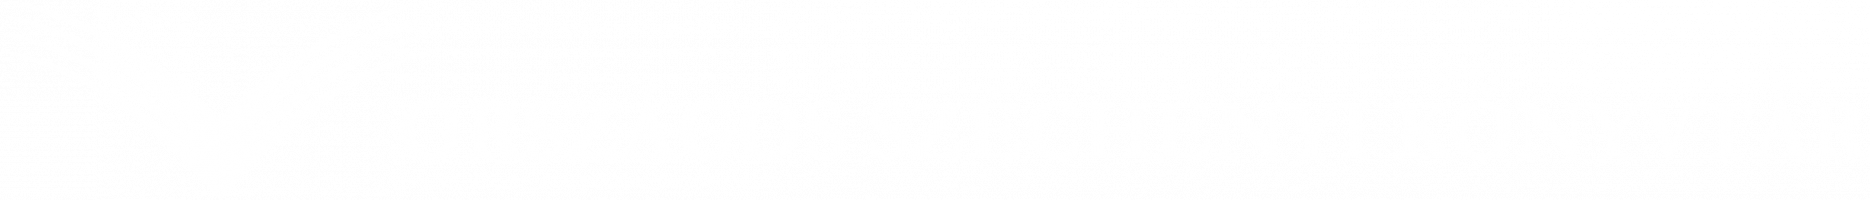 oszk_logo-HU-UJ-2019-web-03_feher